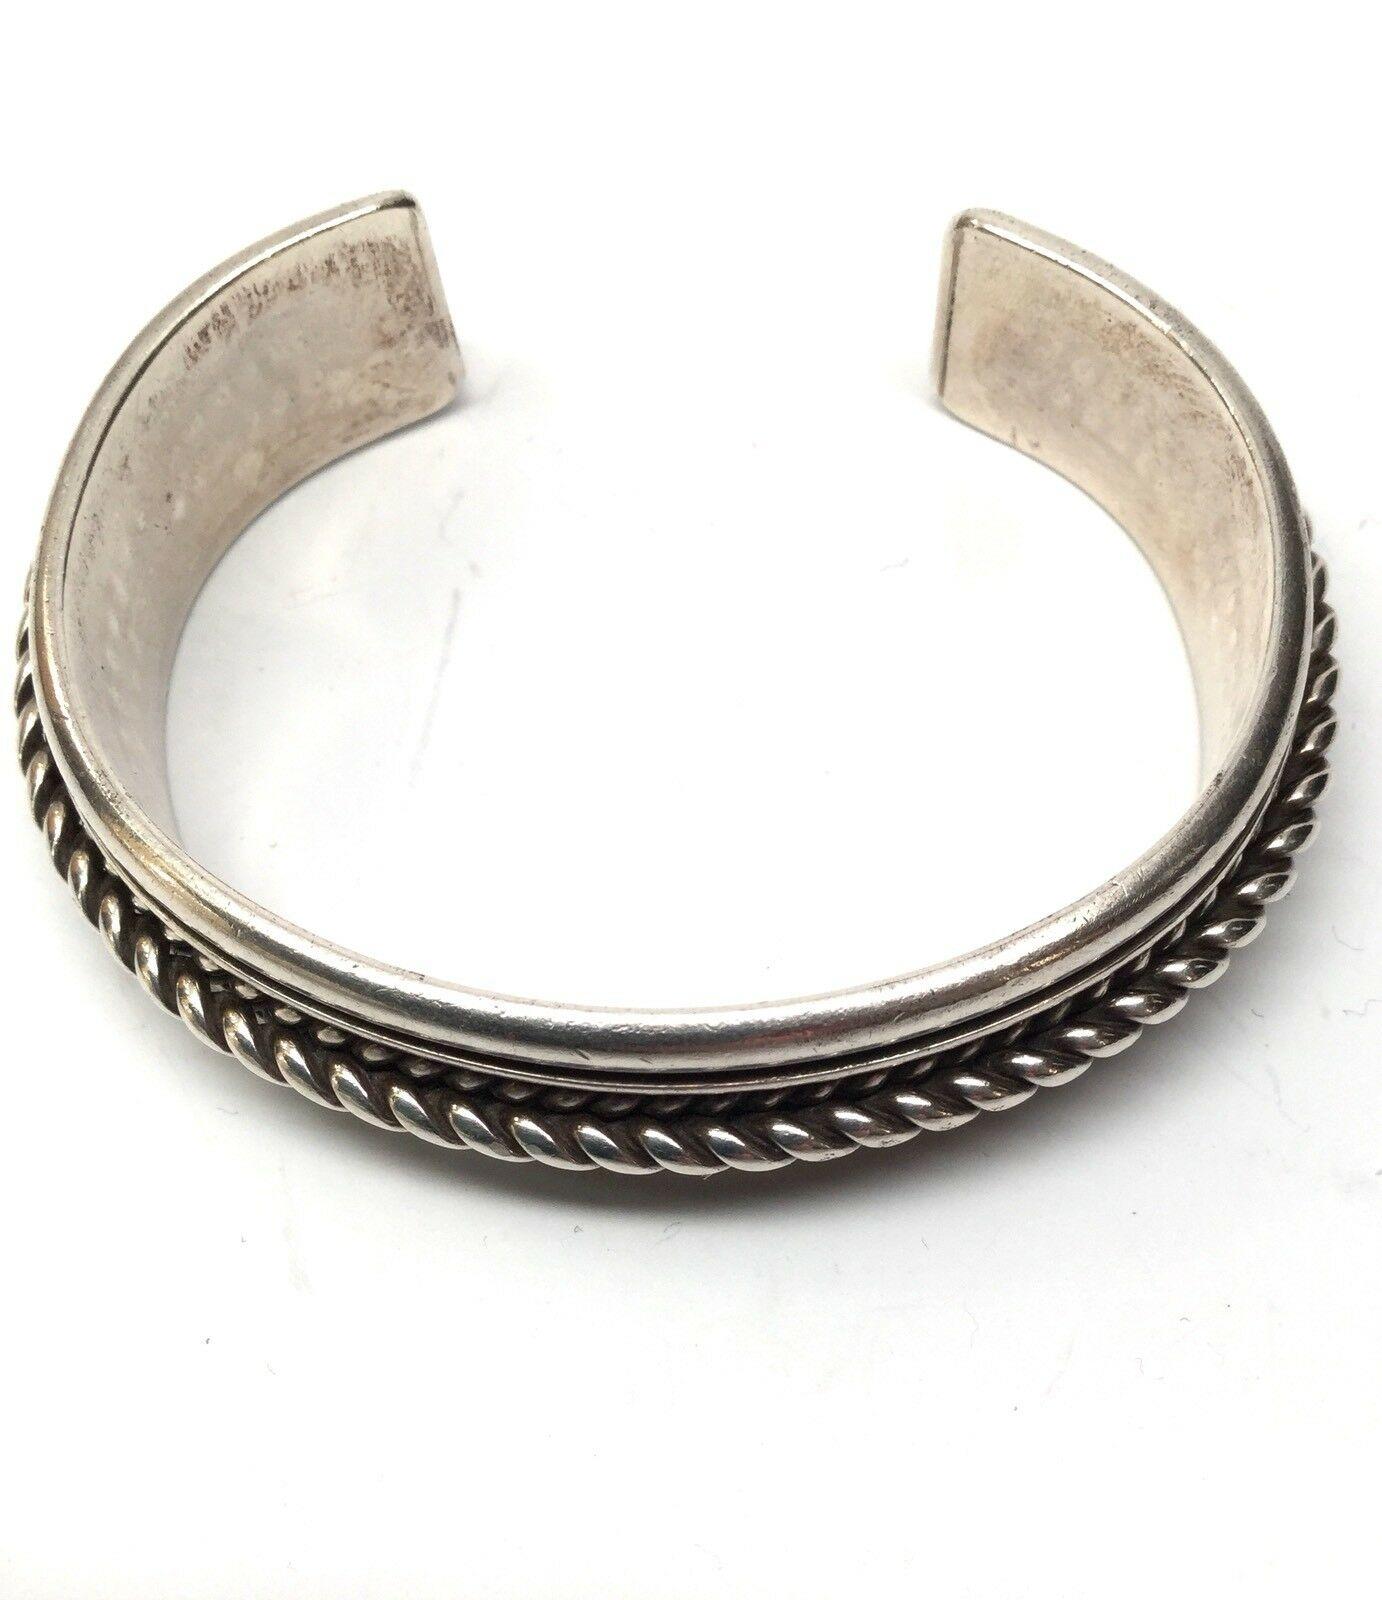 Tom Hawk Native American Navajo Sterling Silver Rope Design Bracelet

This bracelet features a beautiful sterling silver rope design bracelet by Tom Hawk.

Measurements:  Measures approx 5 3/16